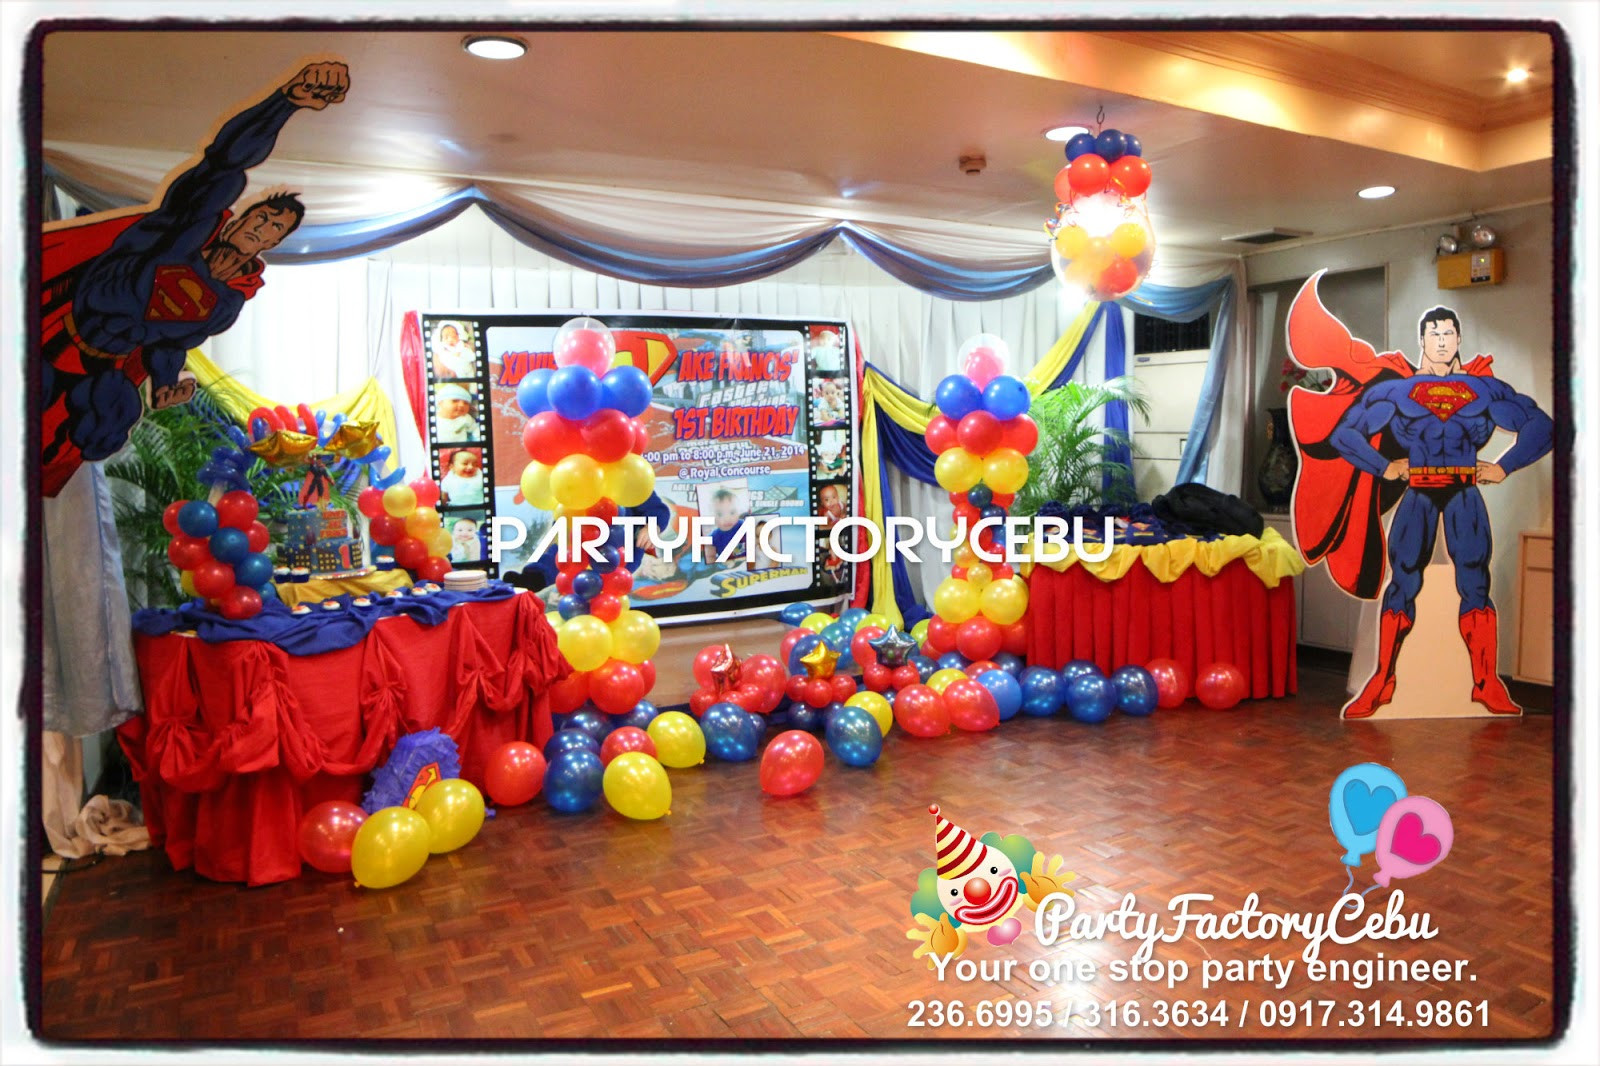 Superman Birthday Decorations
 Wel e to PartyFactory Cebu Jake Francis 1st Superman